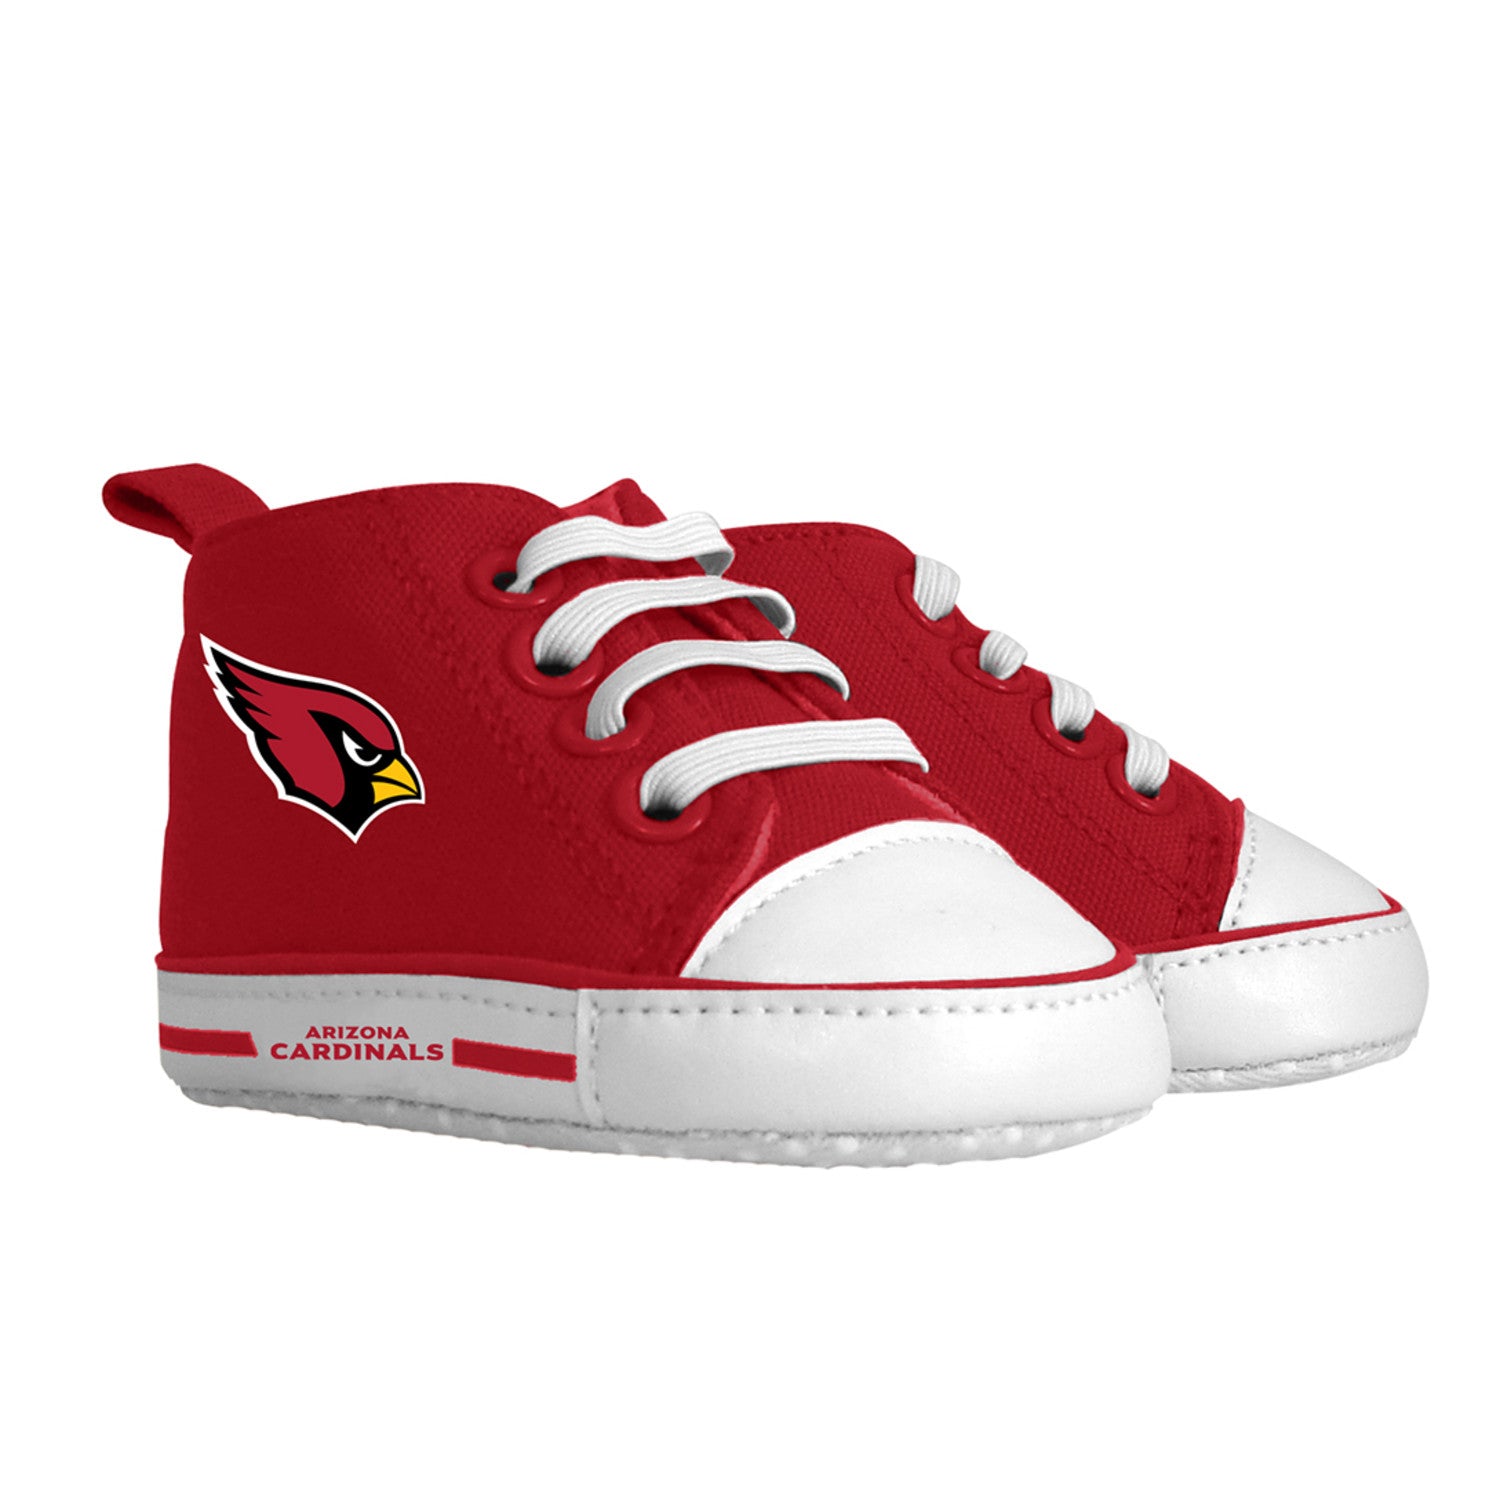 Arizona Cardinals Baby Shoes